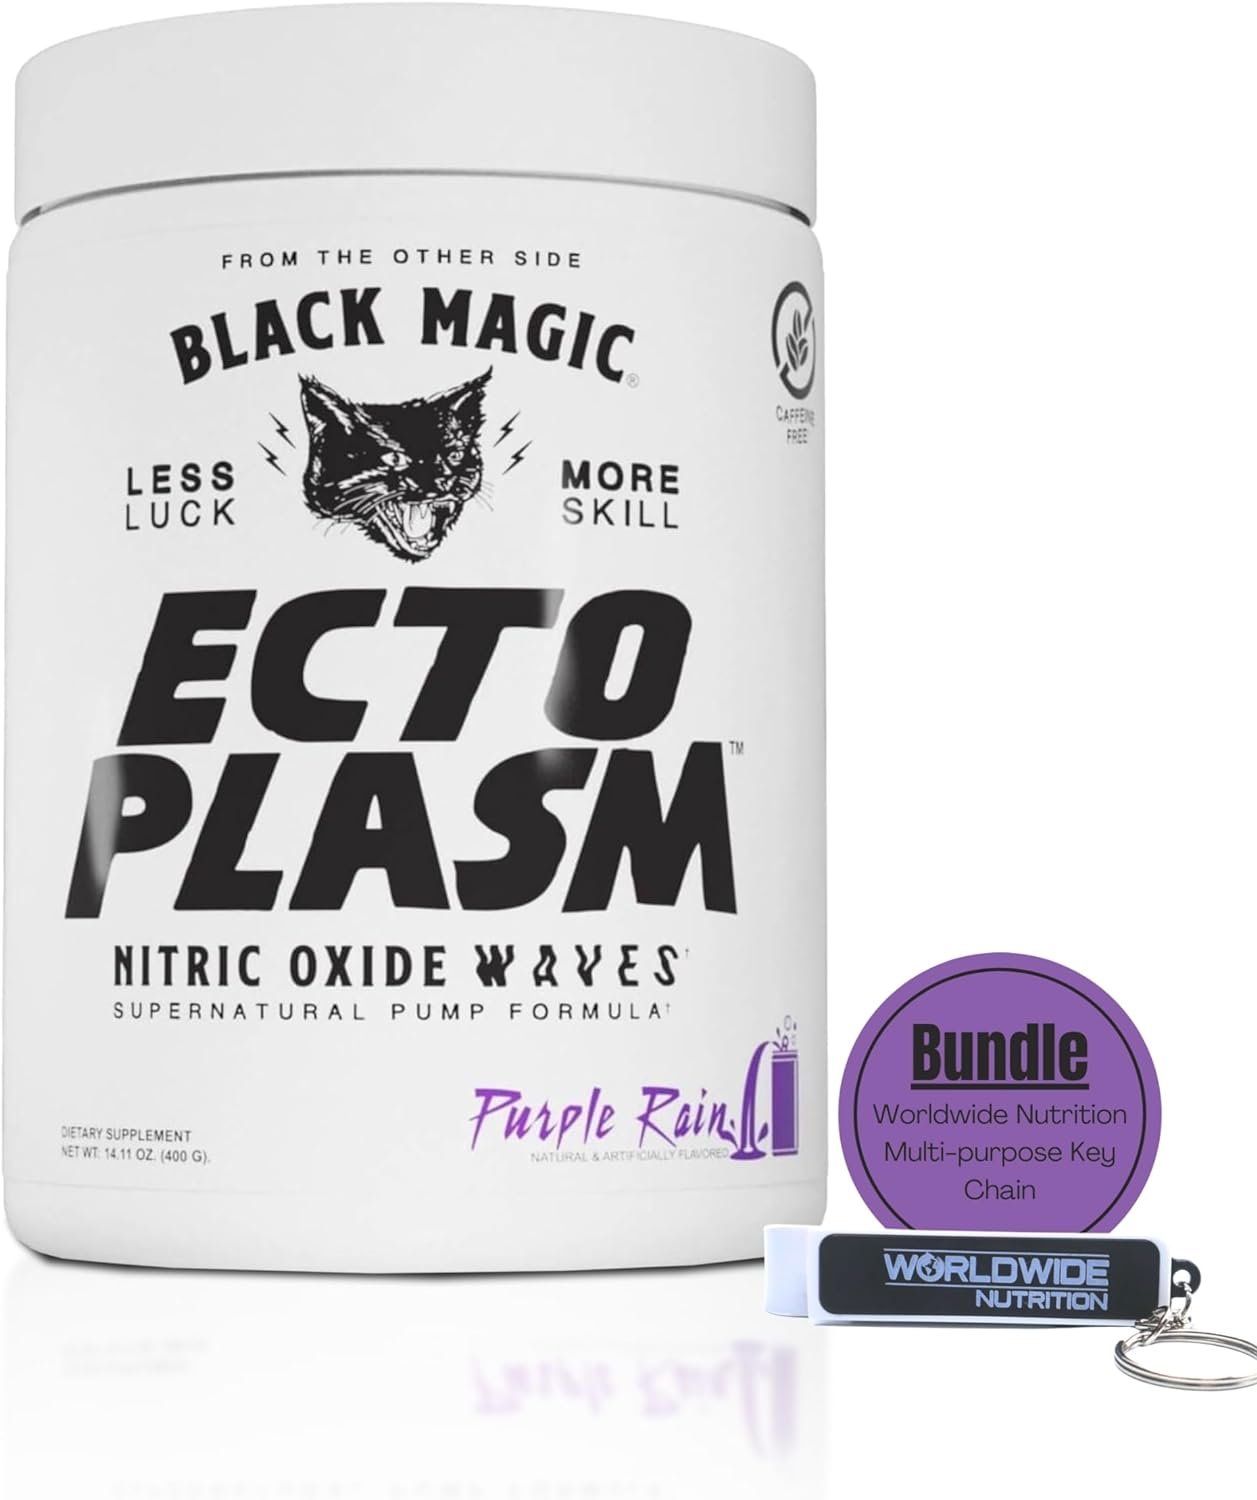 Black Magic Supply Ecto Plasm Nitric Oxide Waves -Supernatural Pump Formula - Non-Stim Pump Pre-Workout - 400g - with Multi-Purpose Key Chain